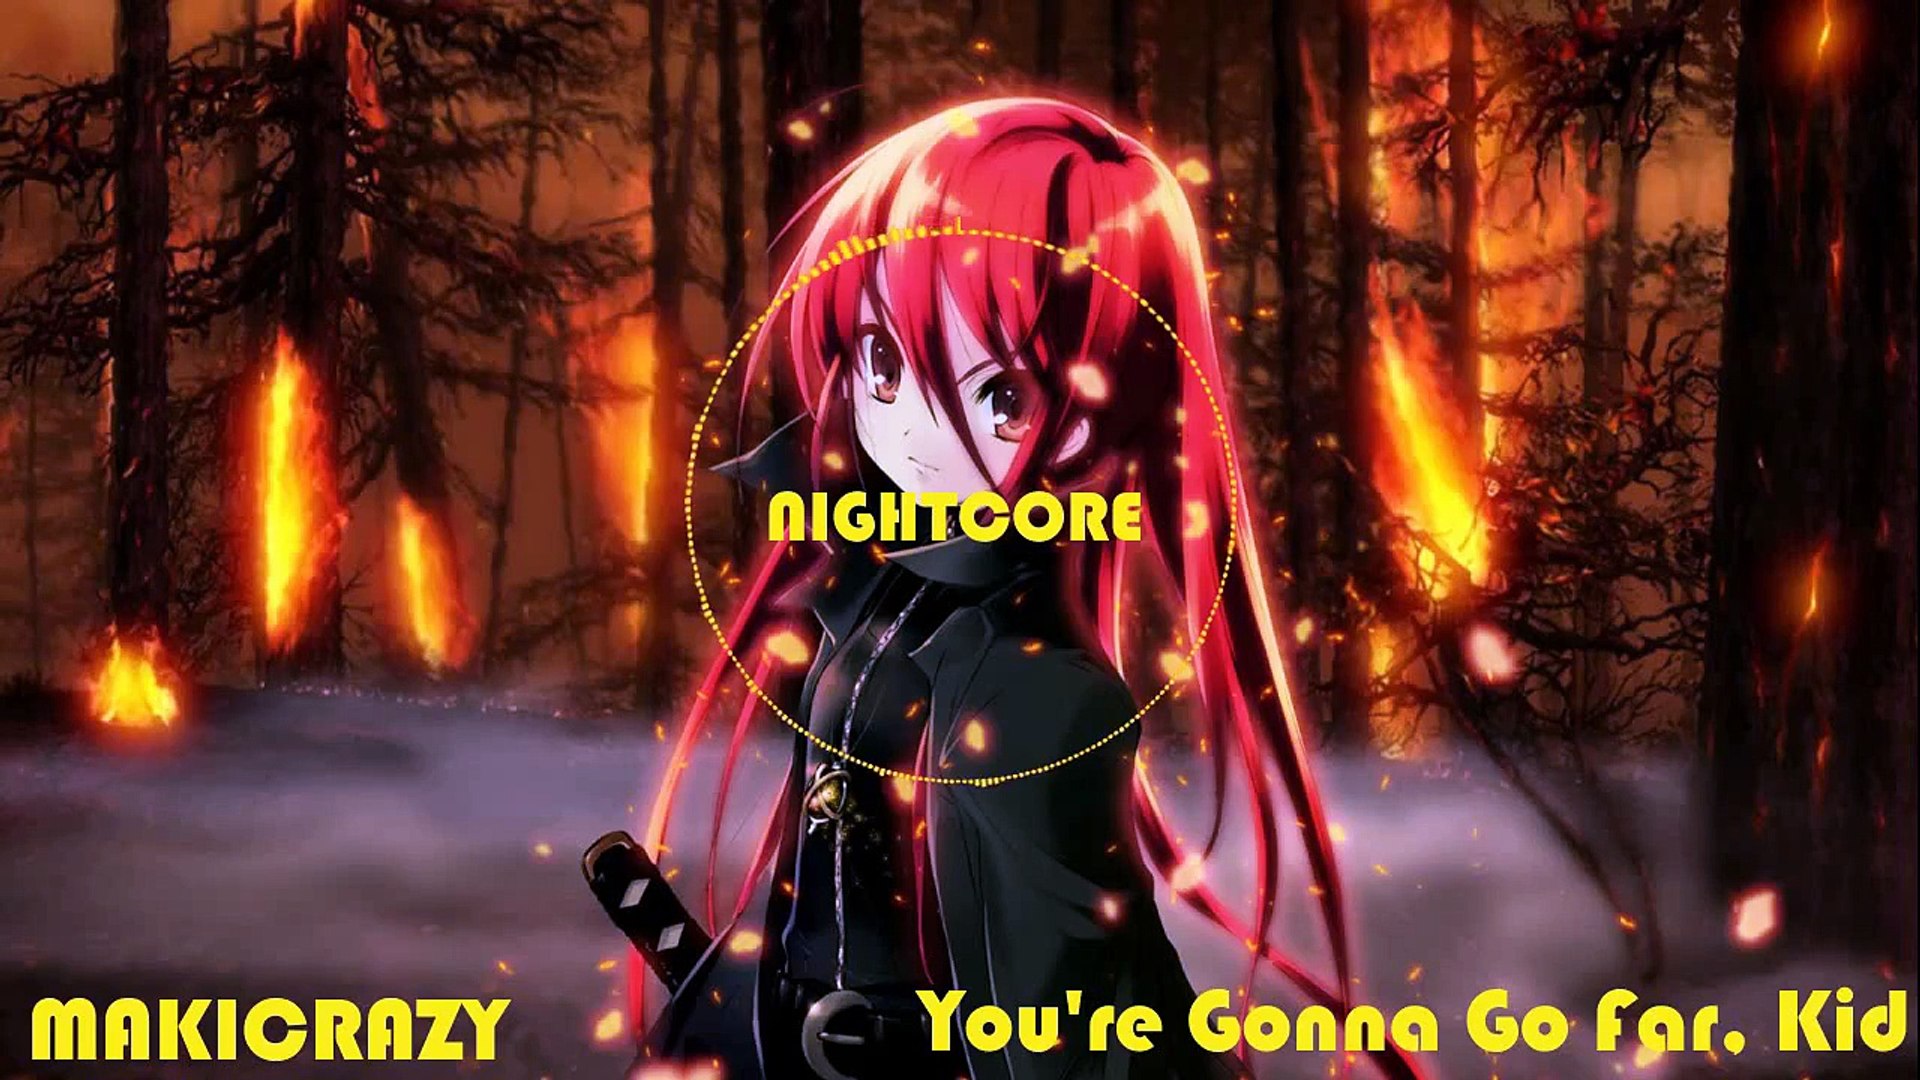 Re:Nightcore